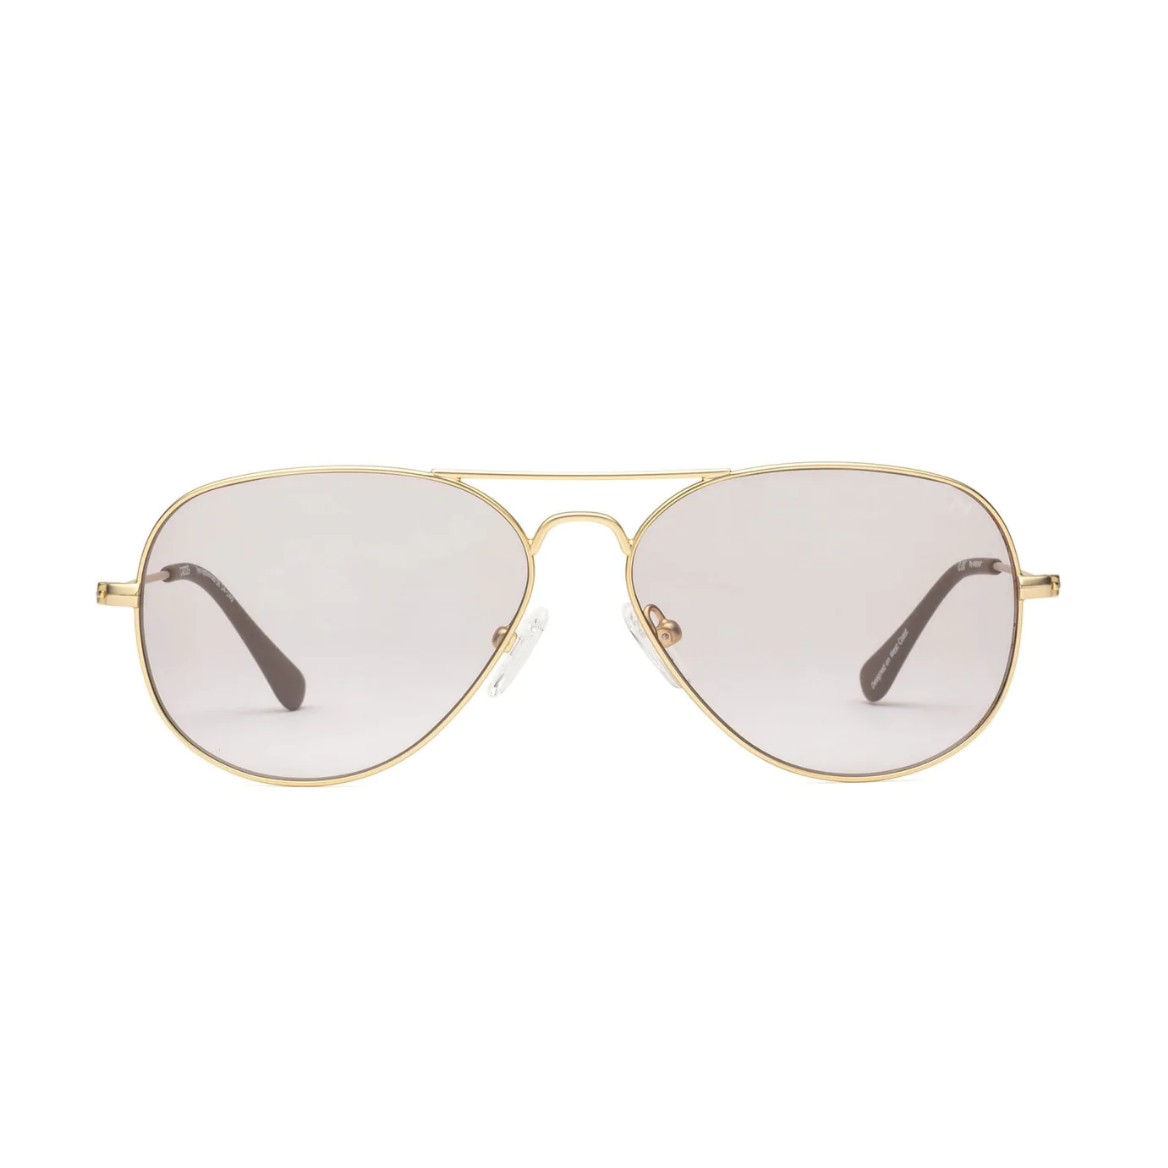 Gotstyle Fashion - Caddis Eyewear Mabuhay Aviator Reading Glasses - Matte Gold Charcoal